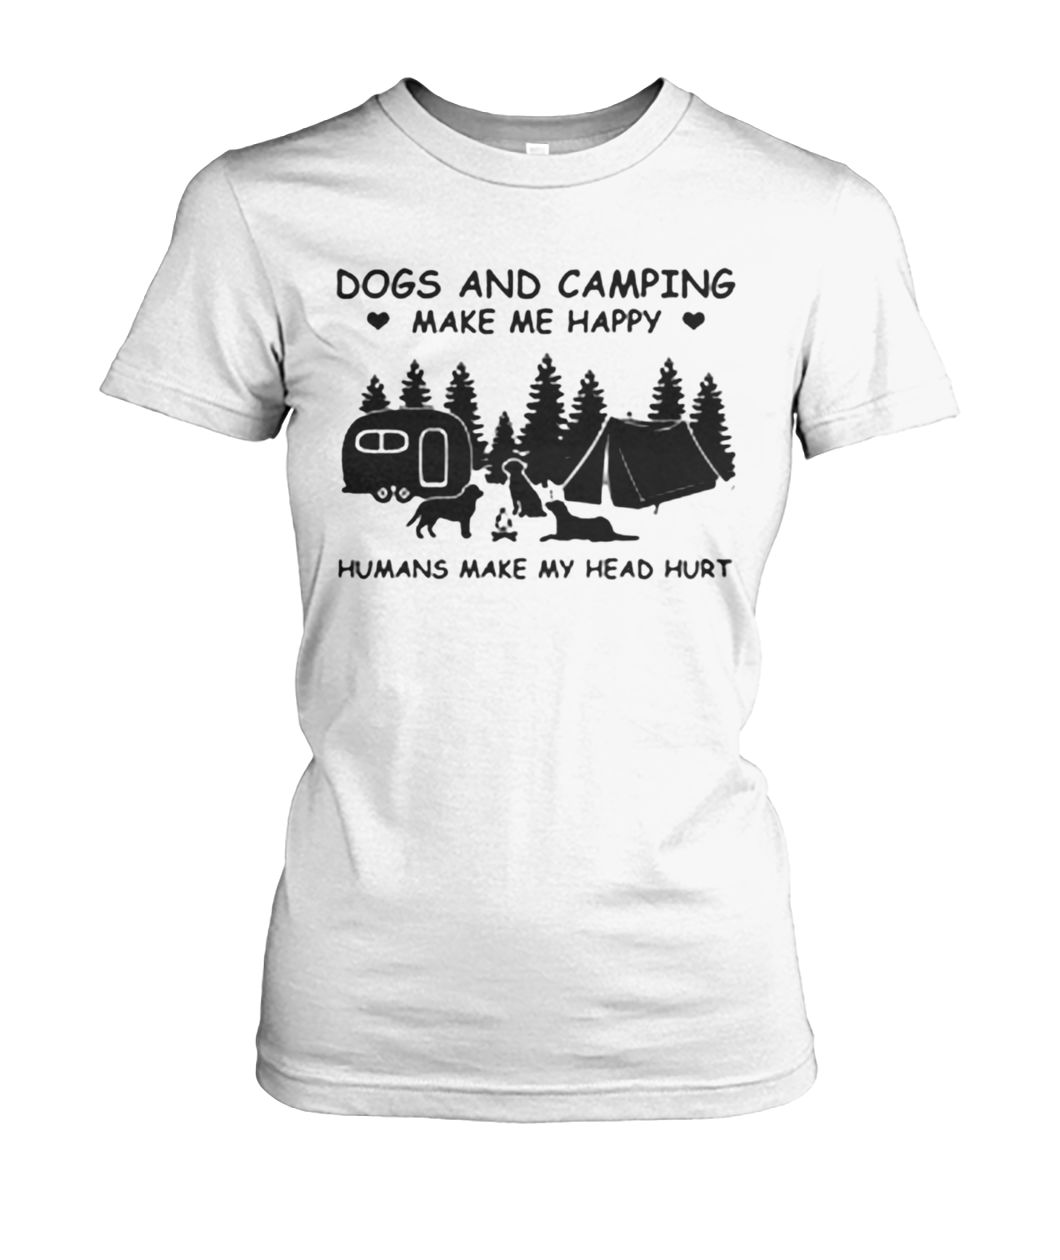 Dog and camping make me happy humans make my head hurt women's crew tee